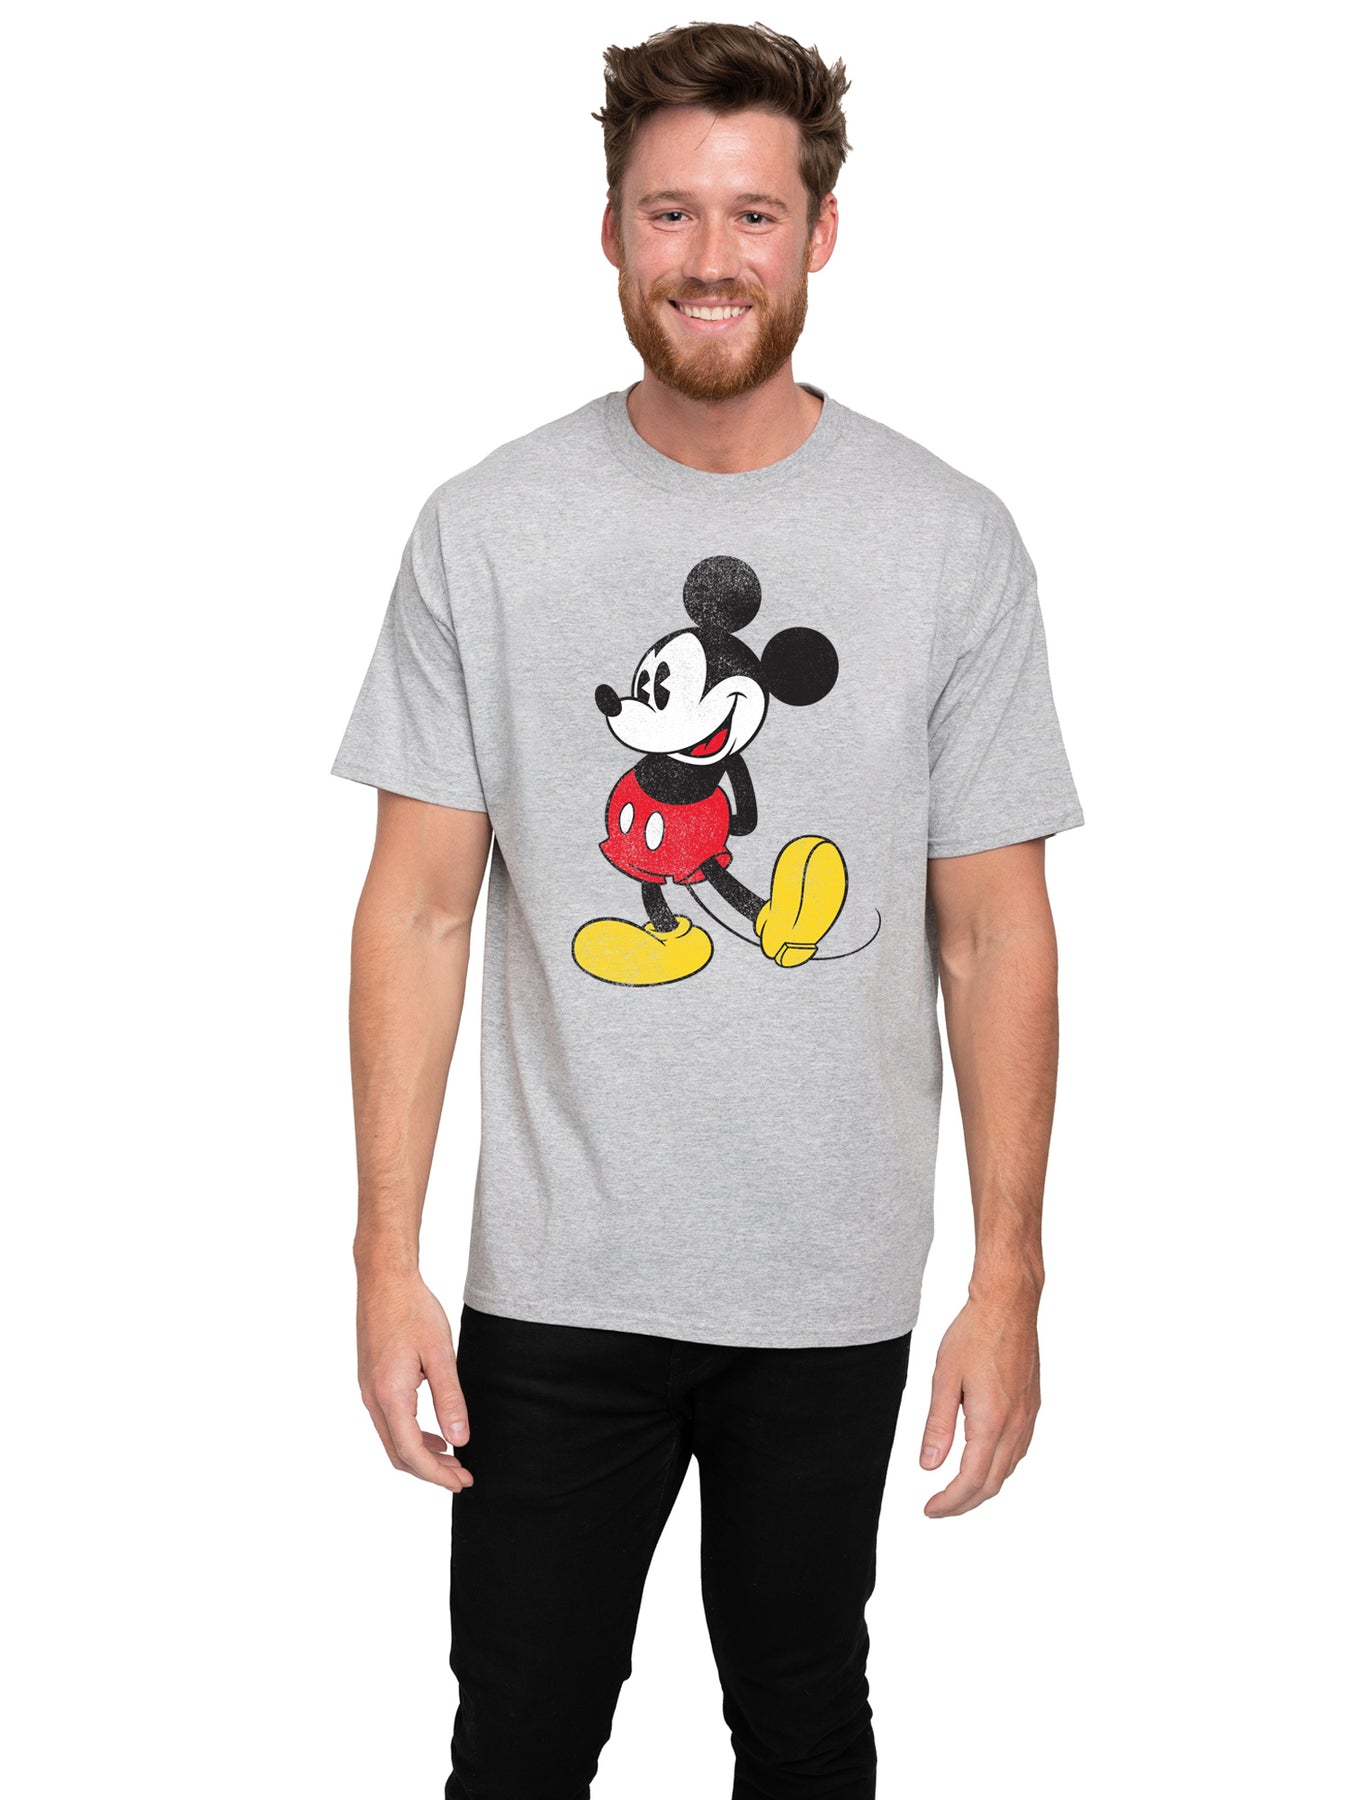 Women's Disney Vintage Toy Story Plus Size Short Sleeve T-Shirt